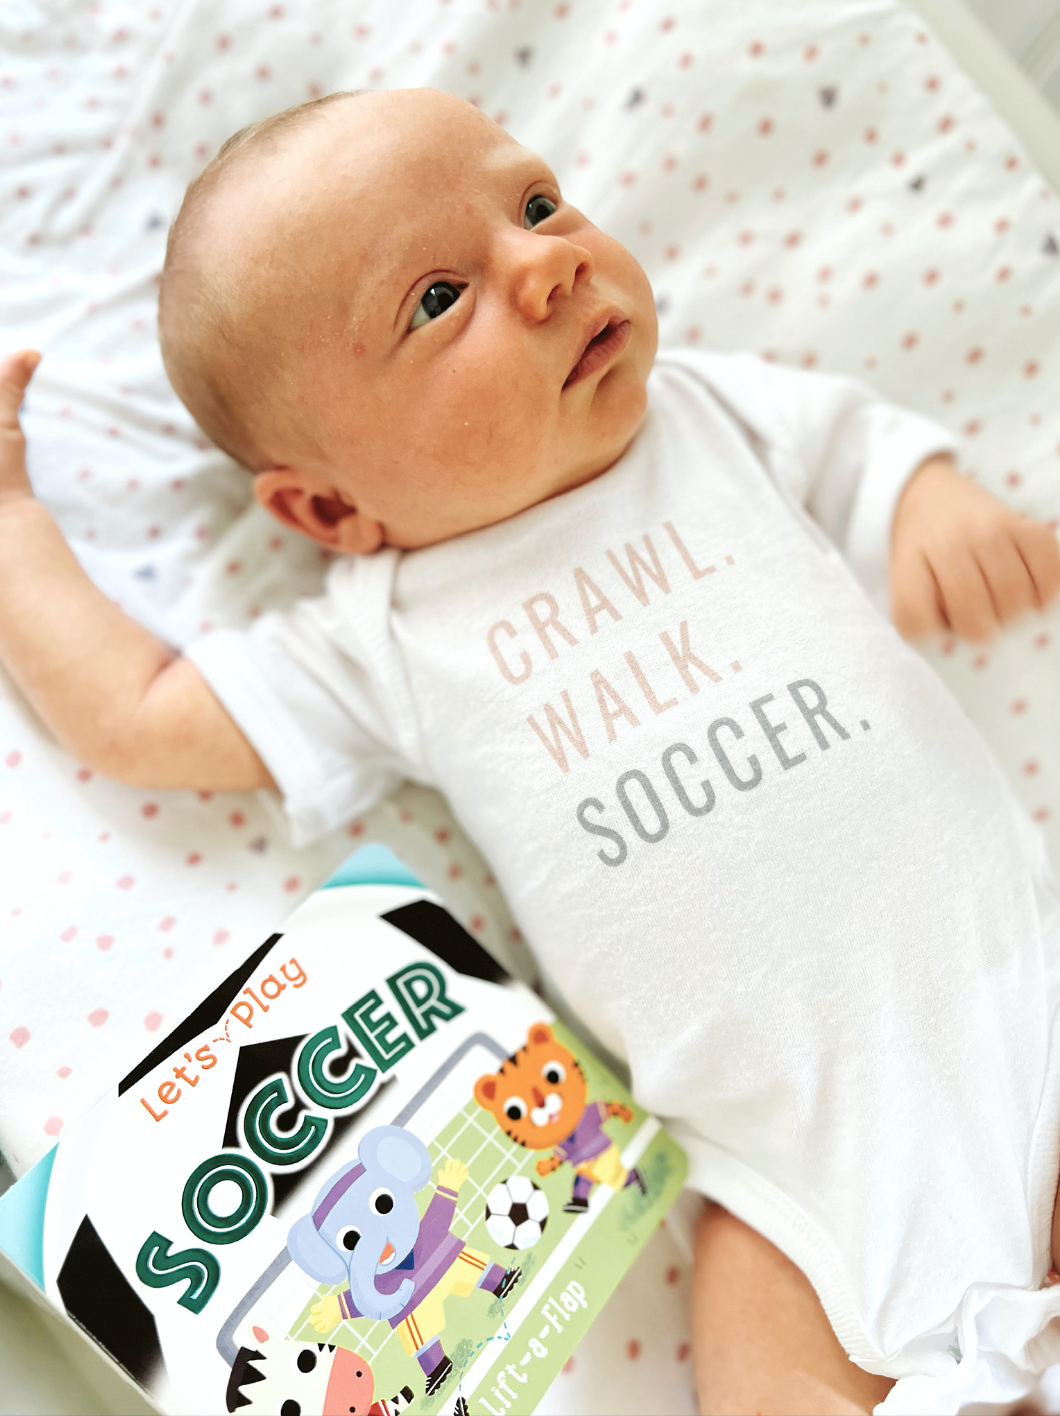 Future Soccer Player Onesie®, Sports Bodysuit, Sporty Baby